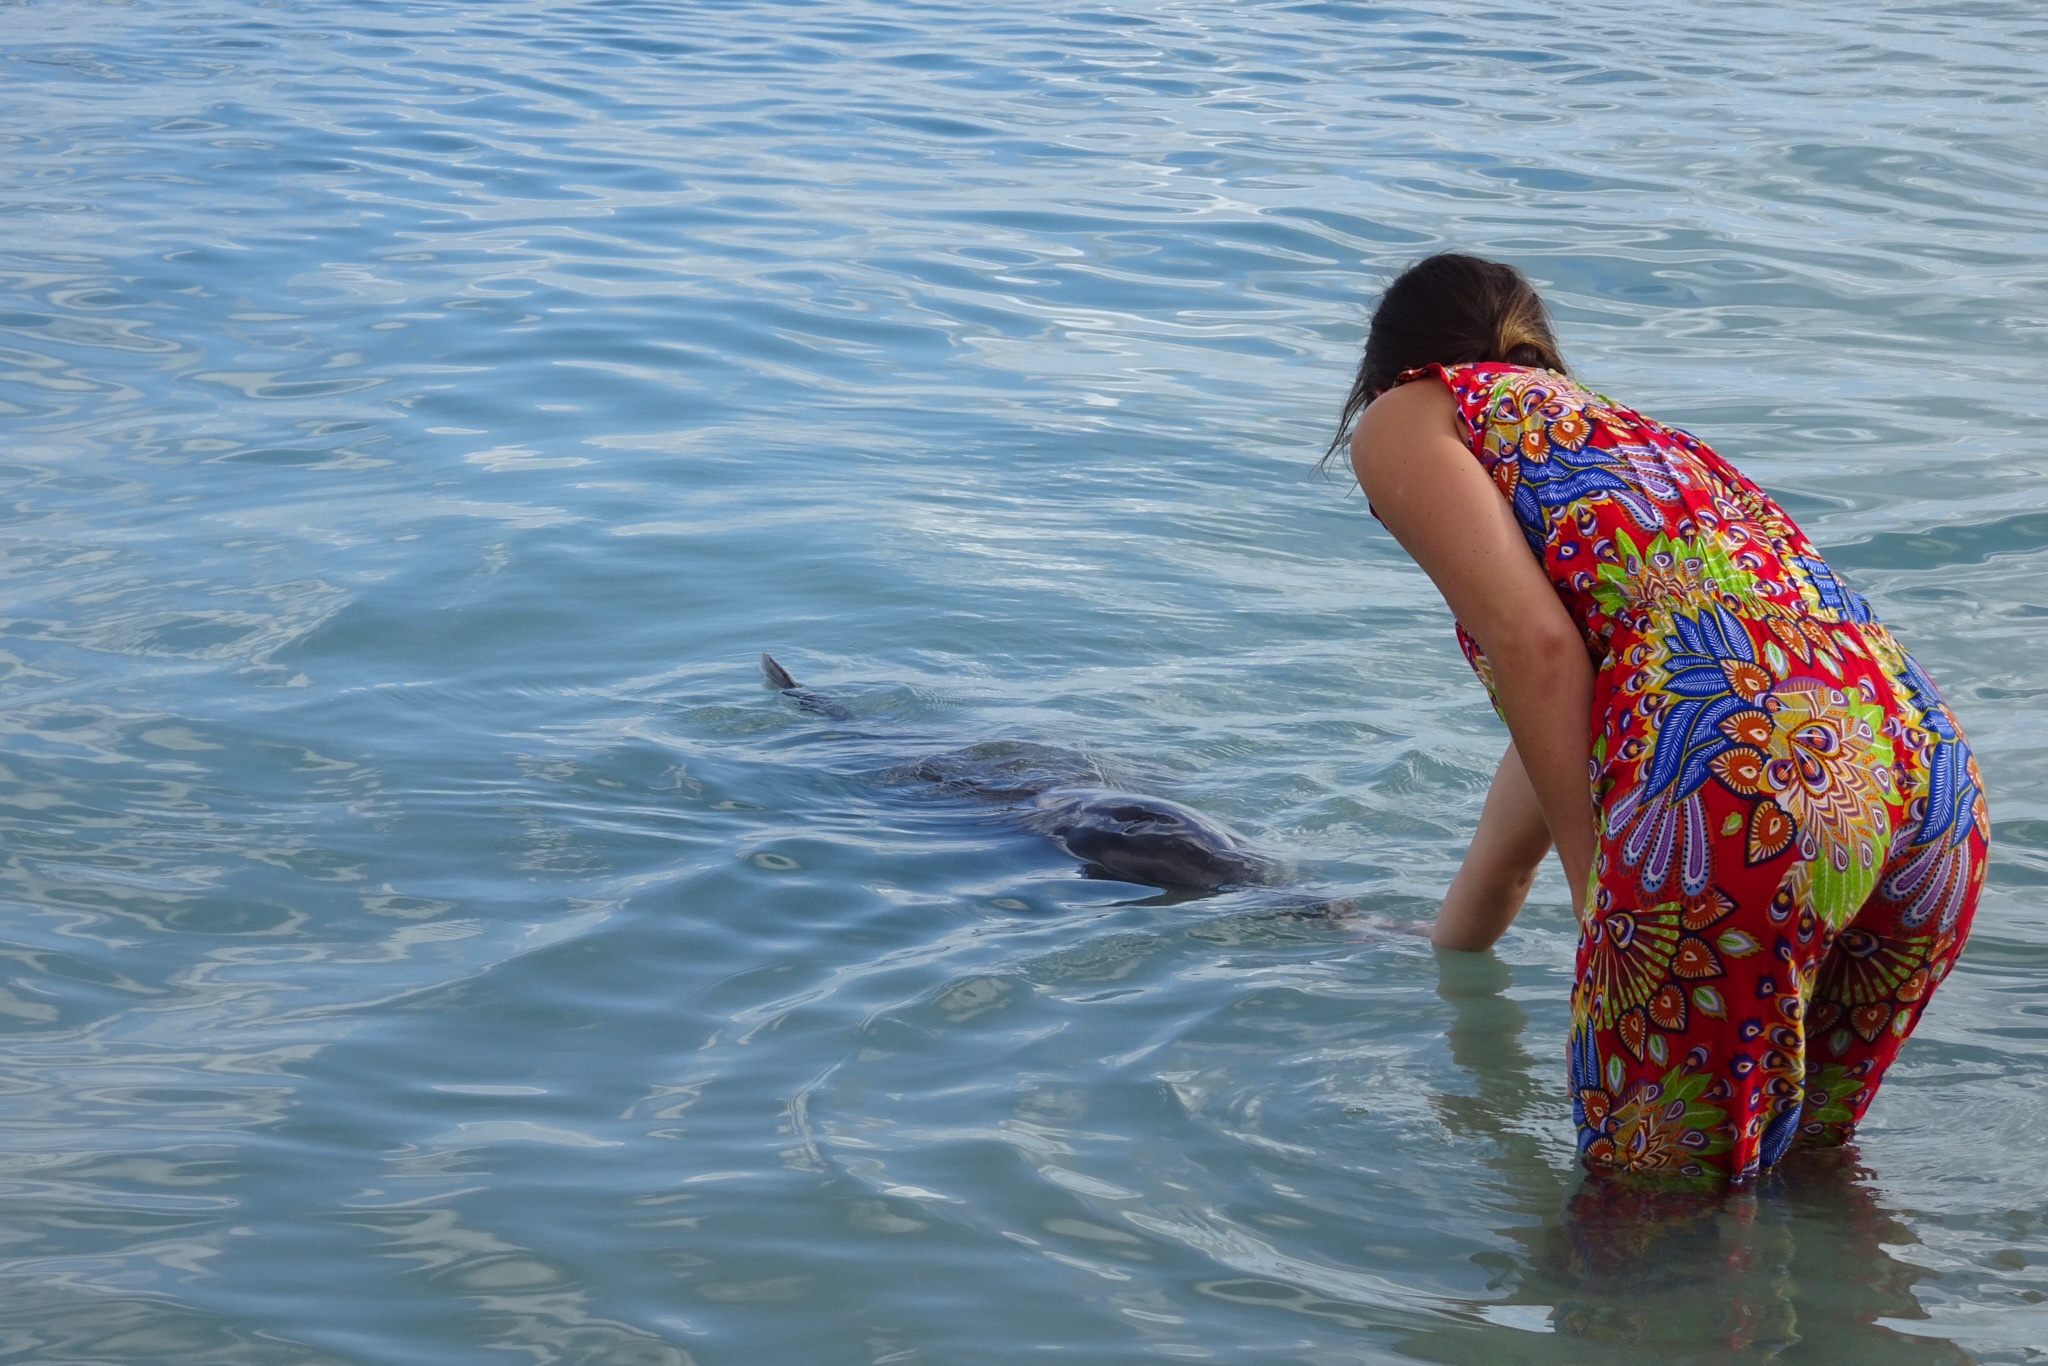 Feeding the dolphins